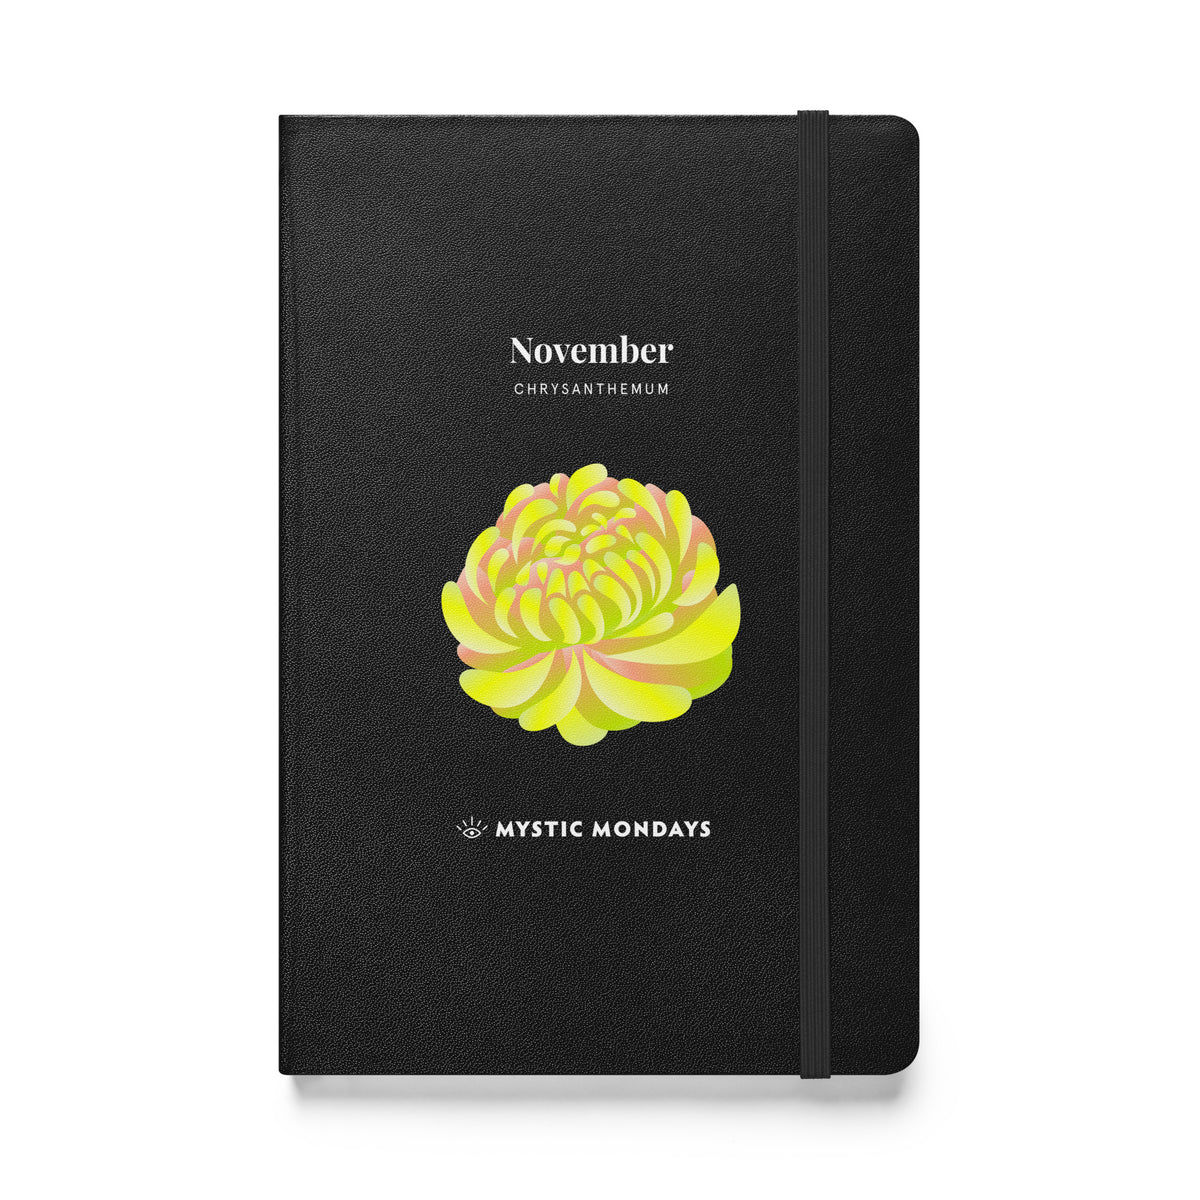 Chrysanthemum Hardcover Journal